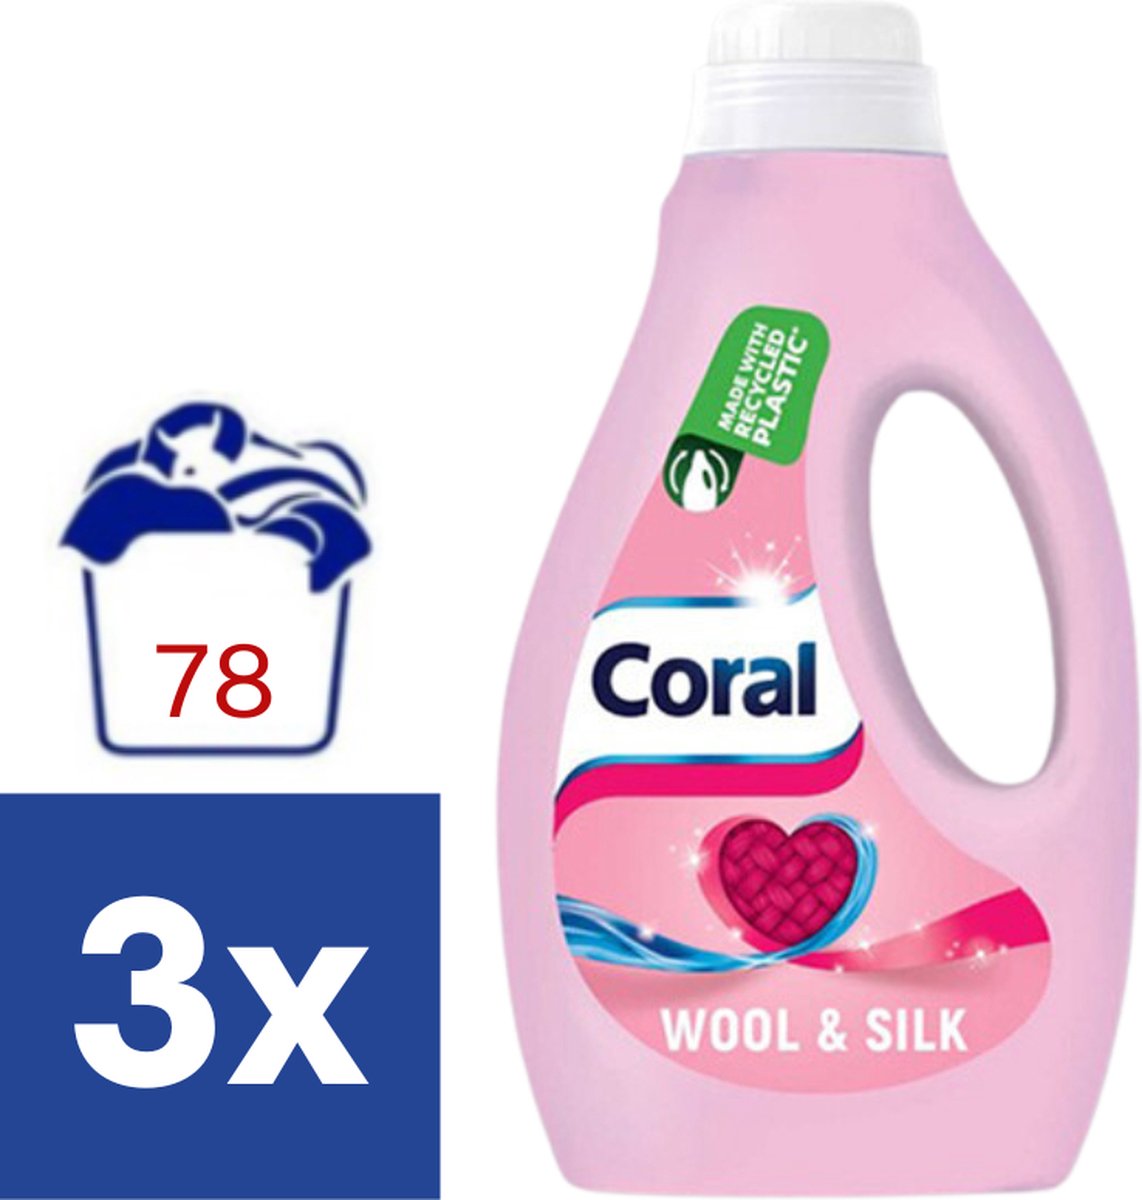 Coral Wool & Silk Vloeibaar Wasmiddel - 3 x 1.17 l (78 wasbeurten)